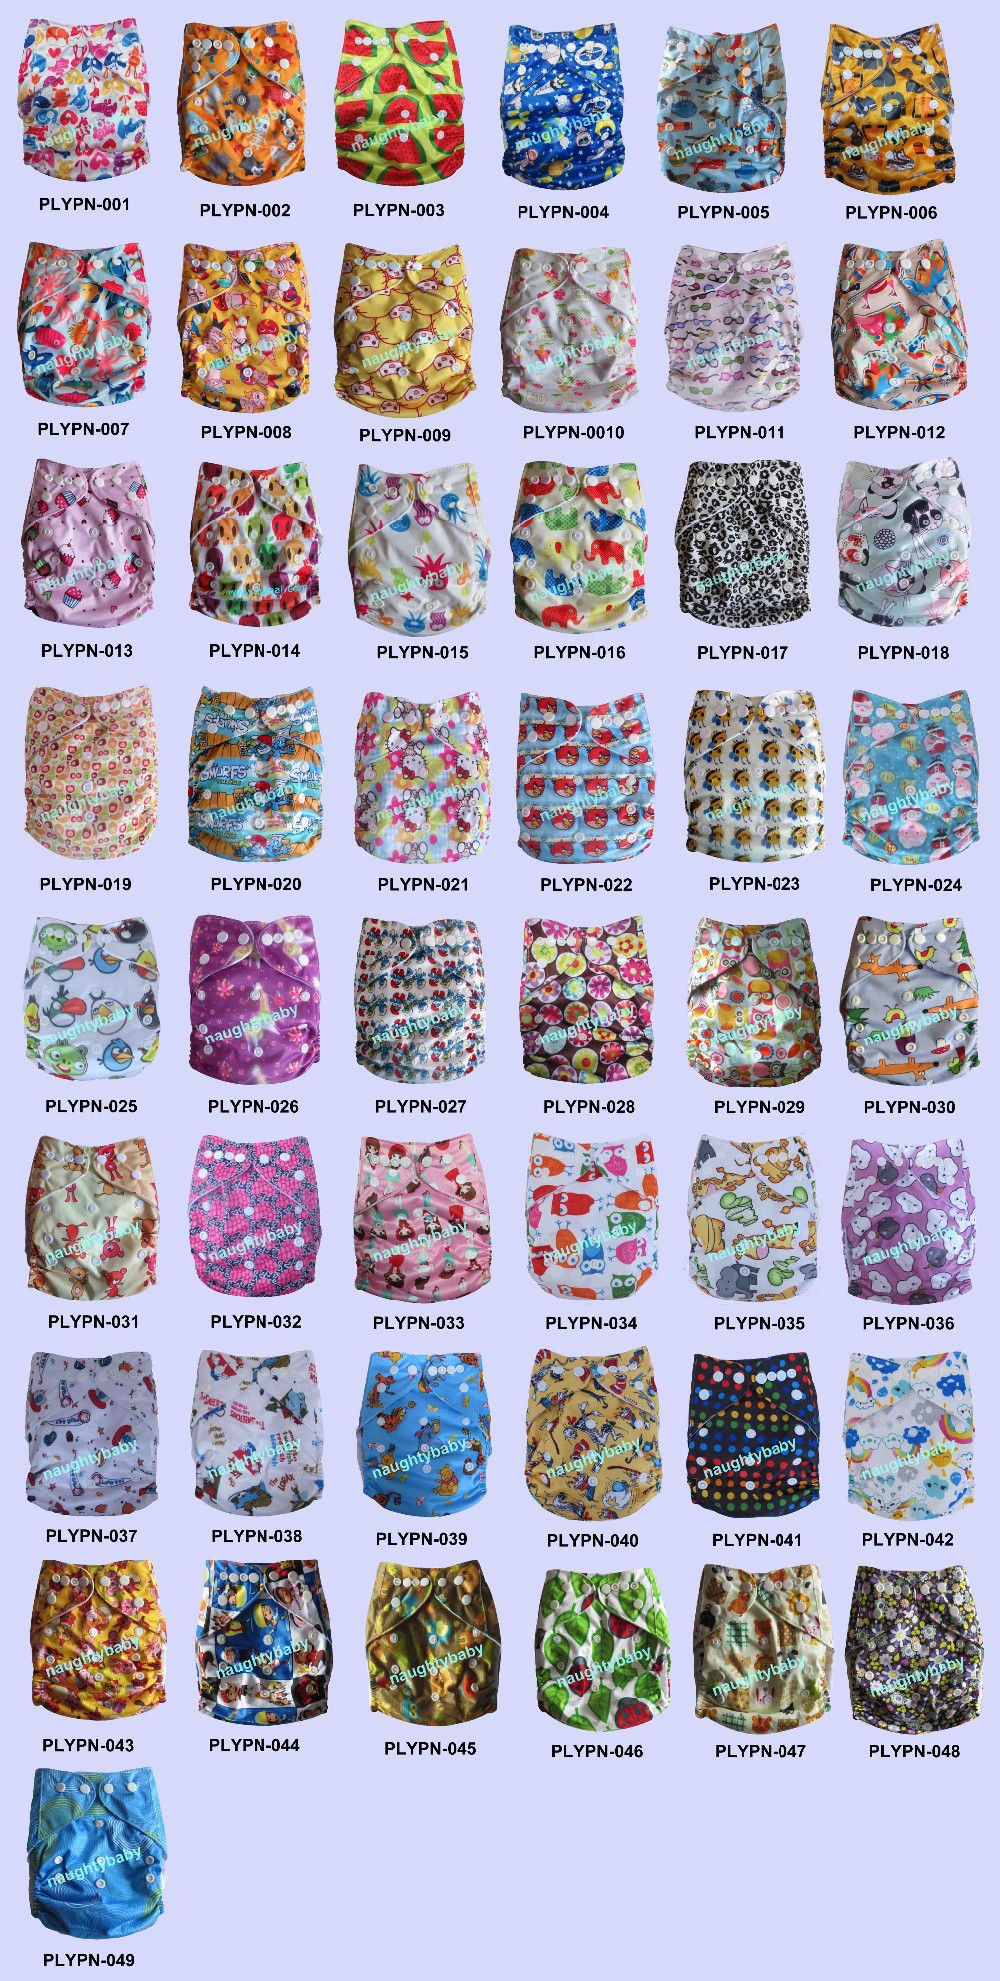 Cartoon(special) printed cloth diaper pattern list